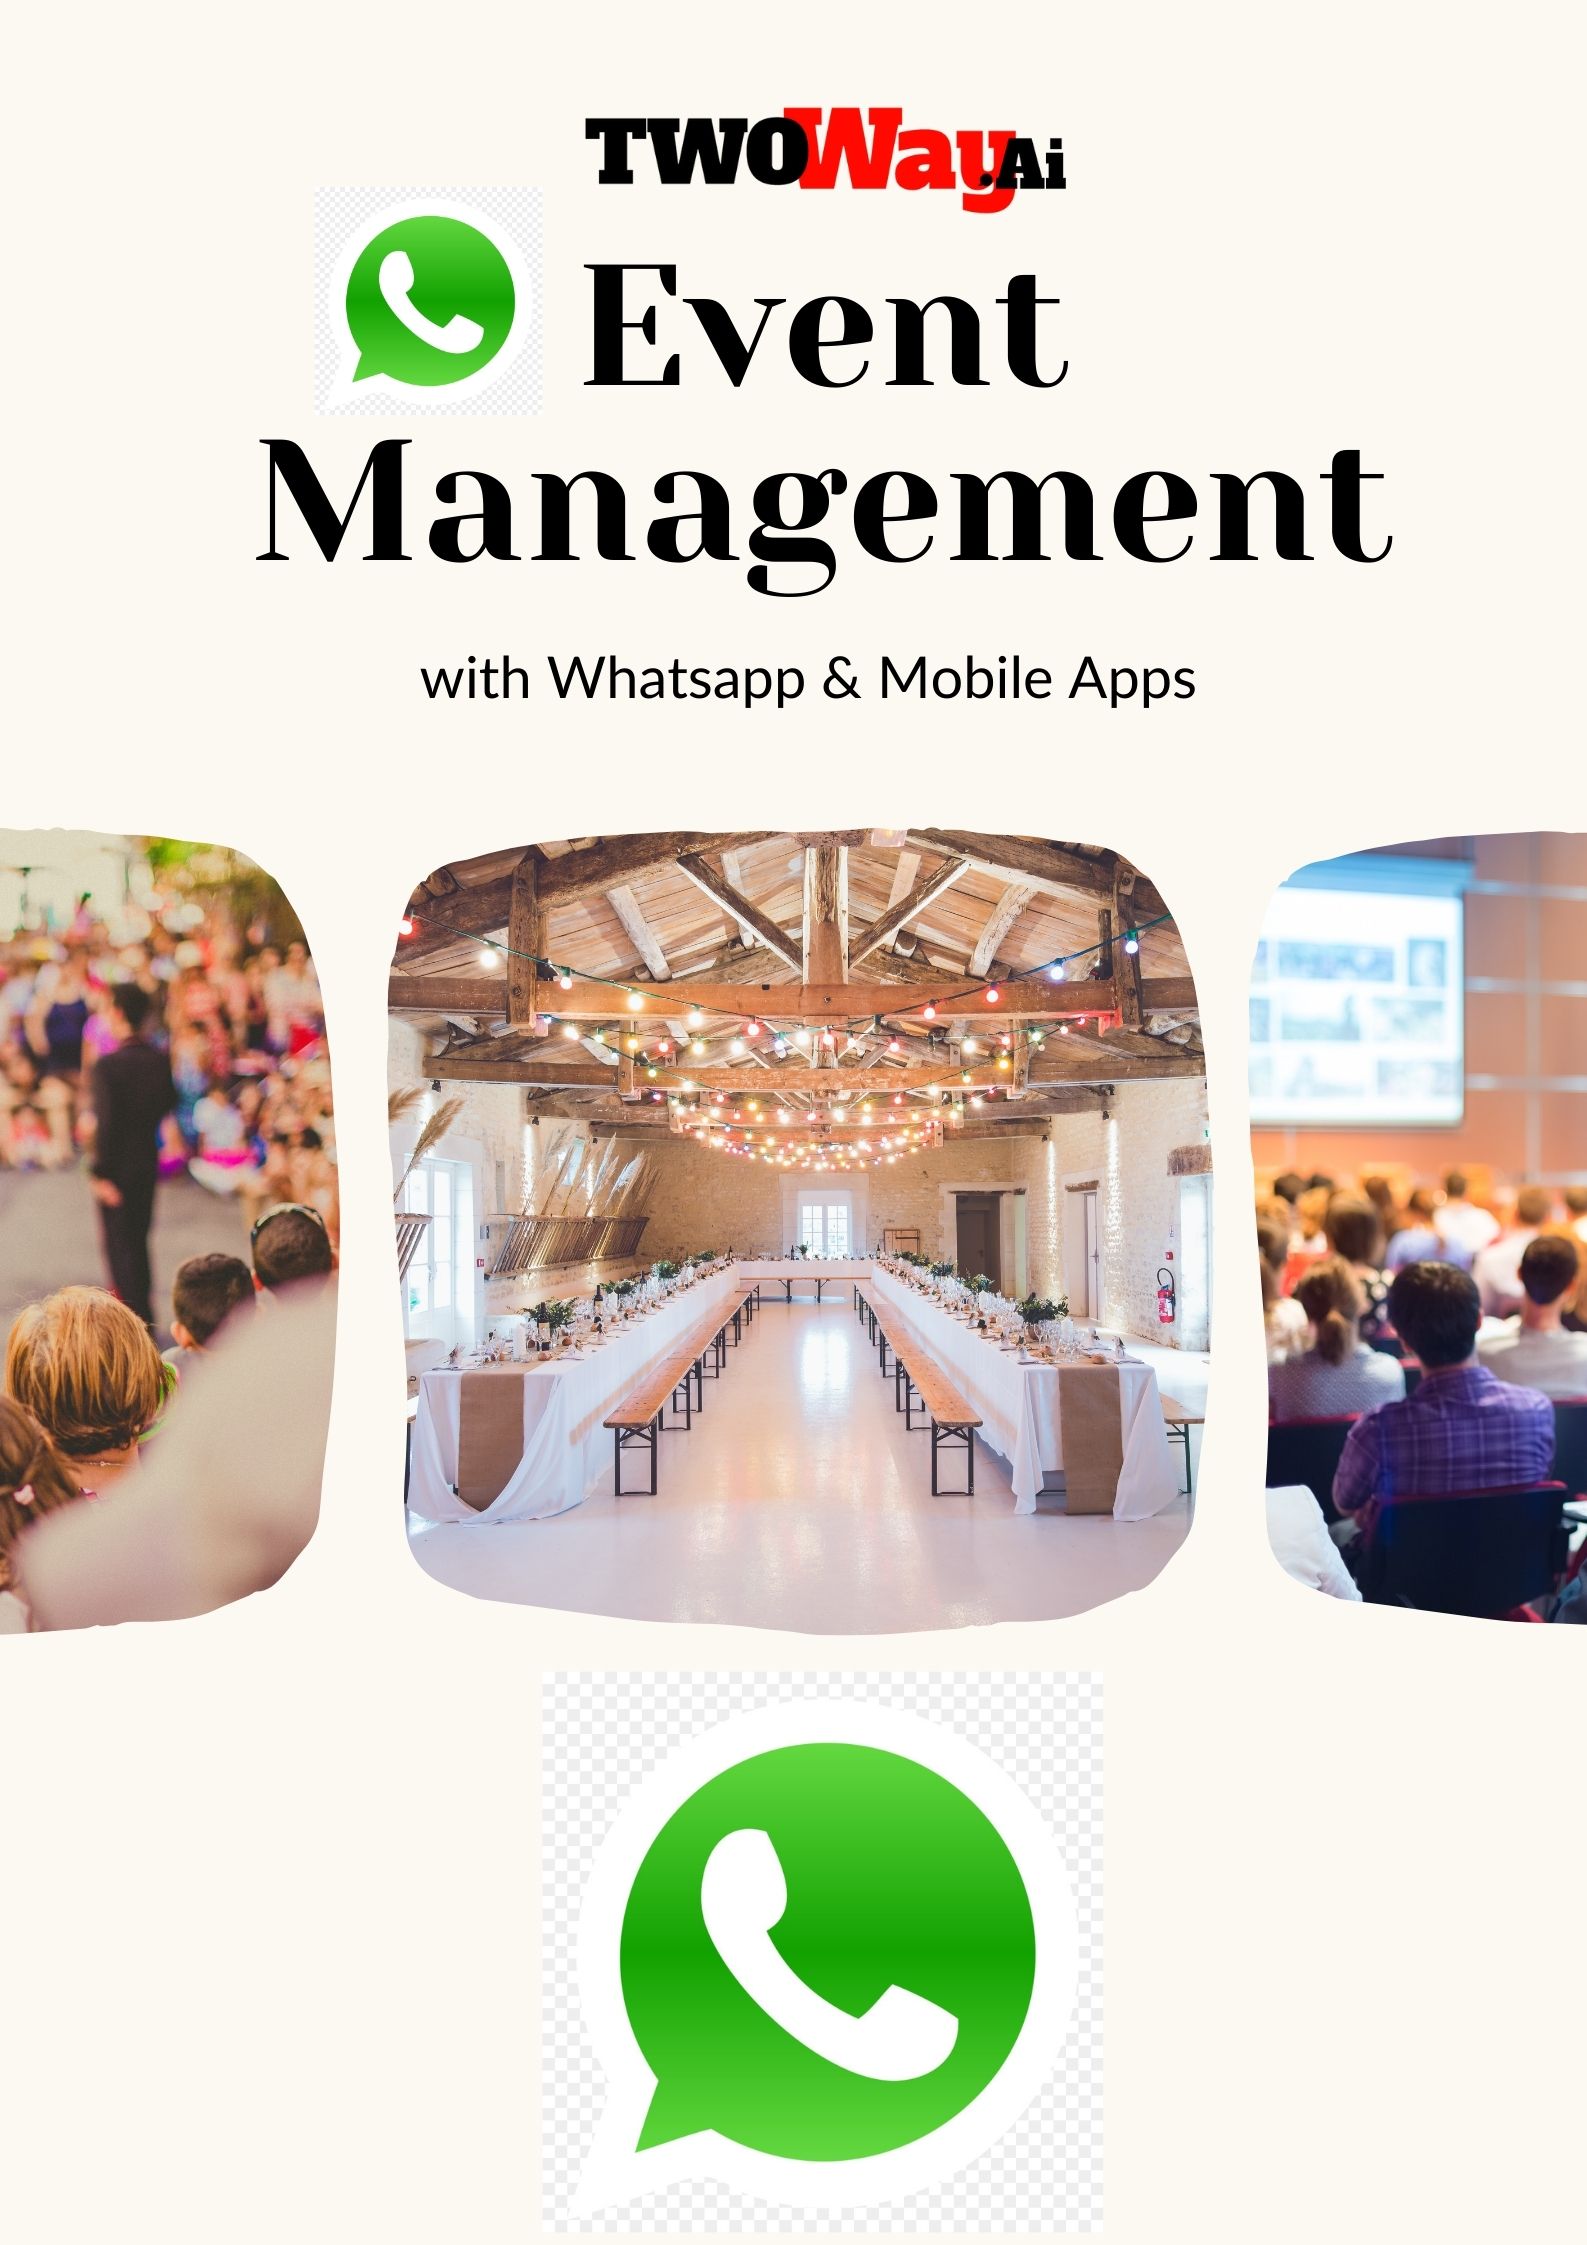 Whatsapp event management